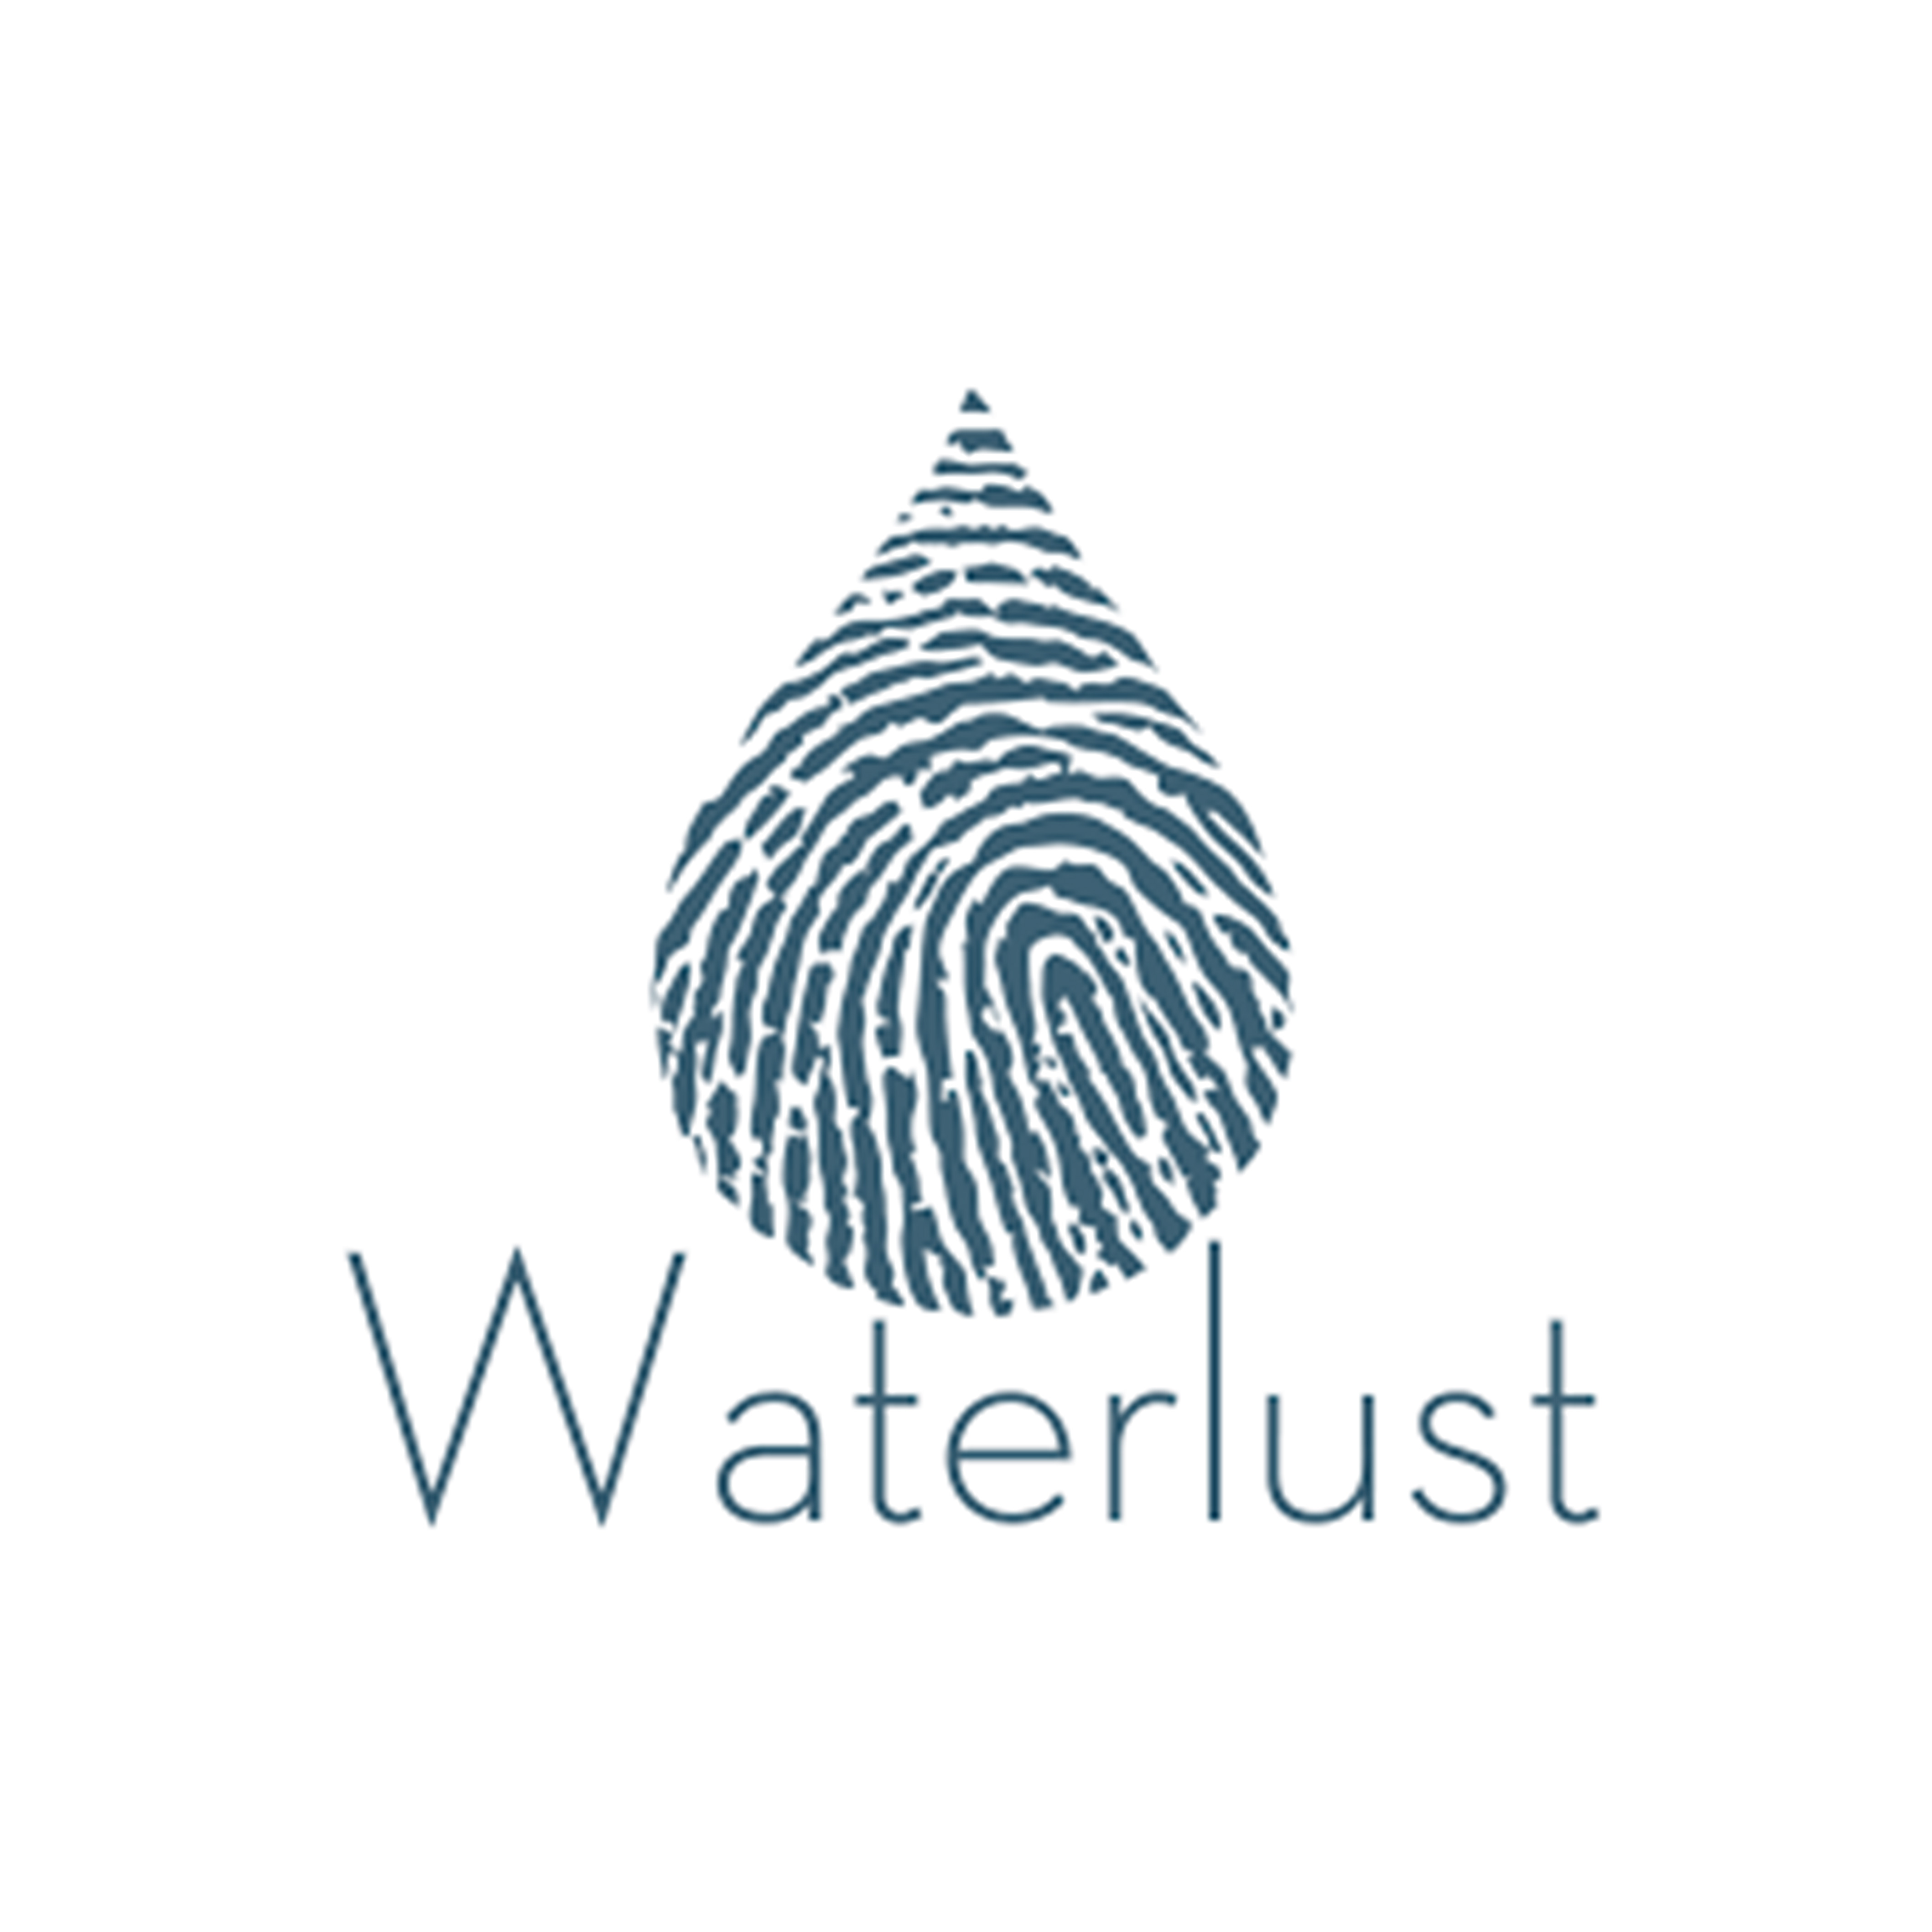 Waterlust logo